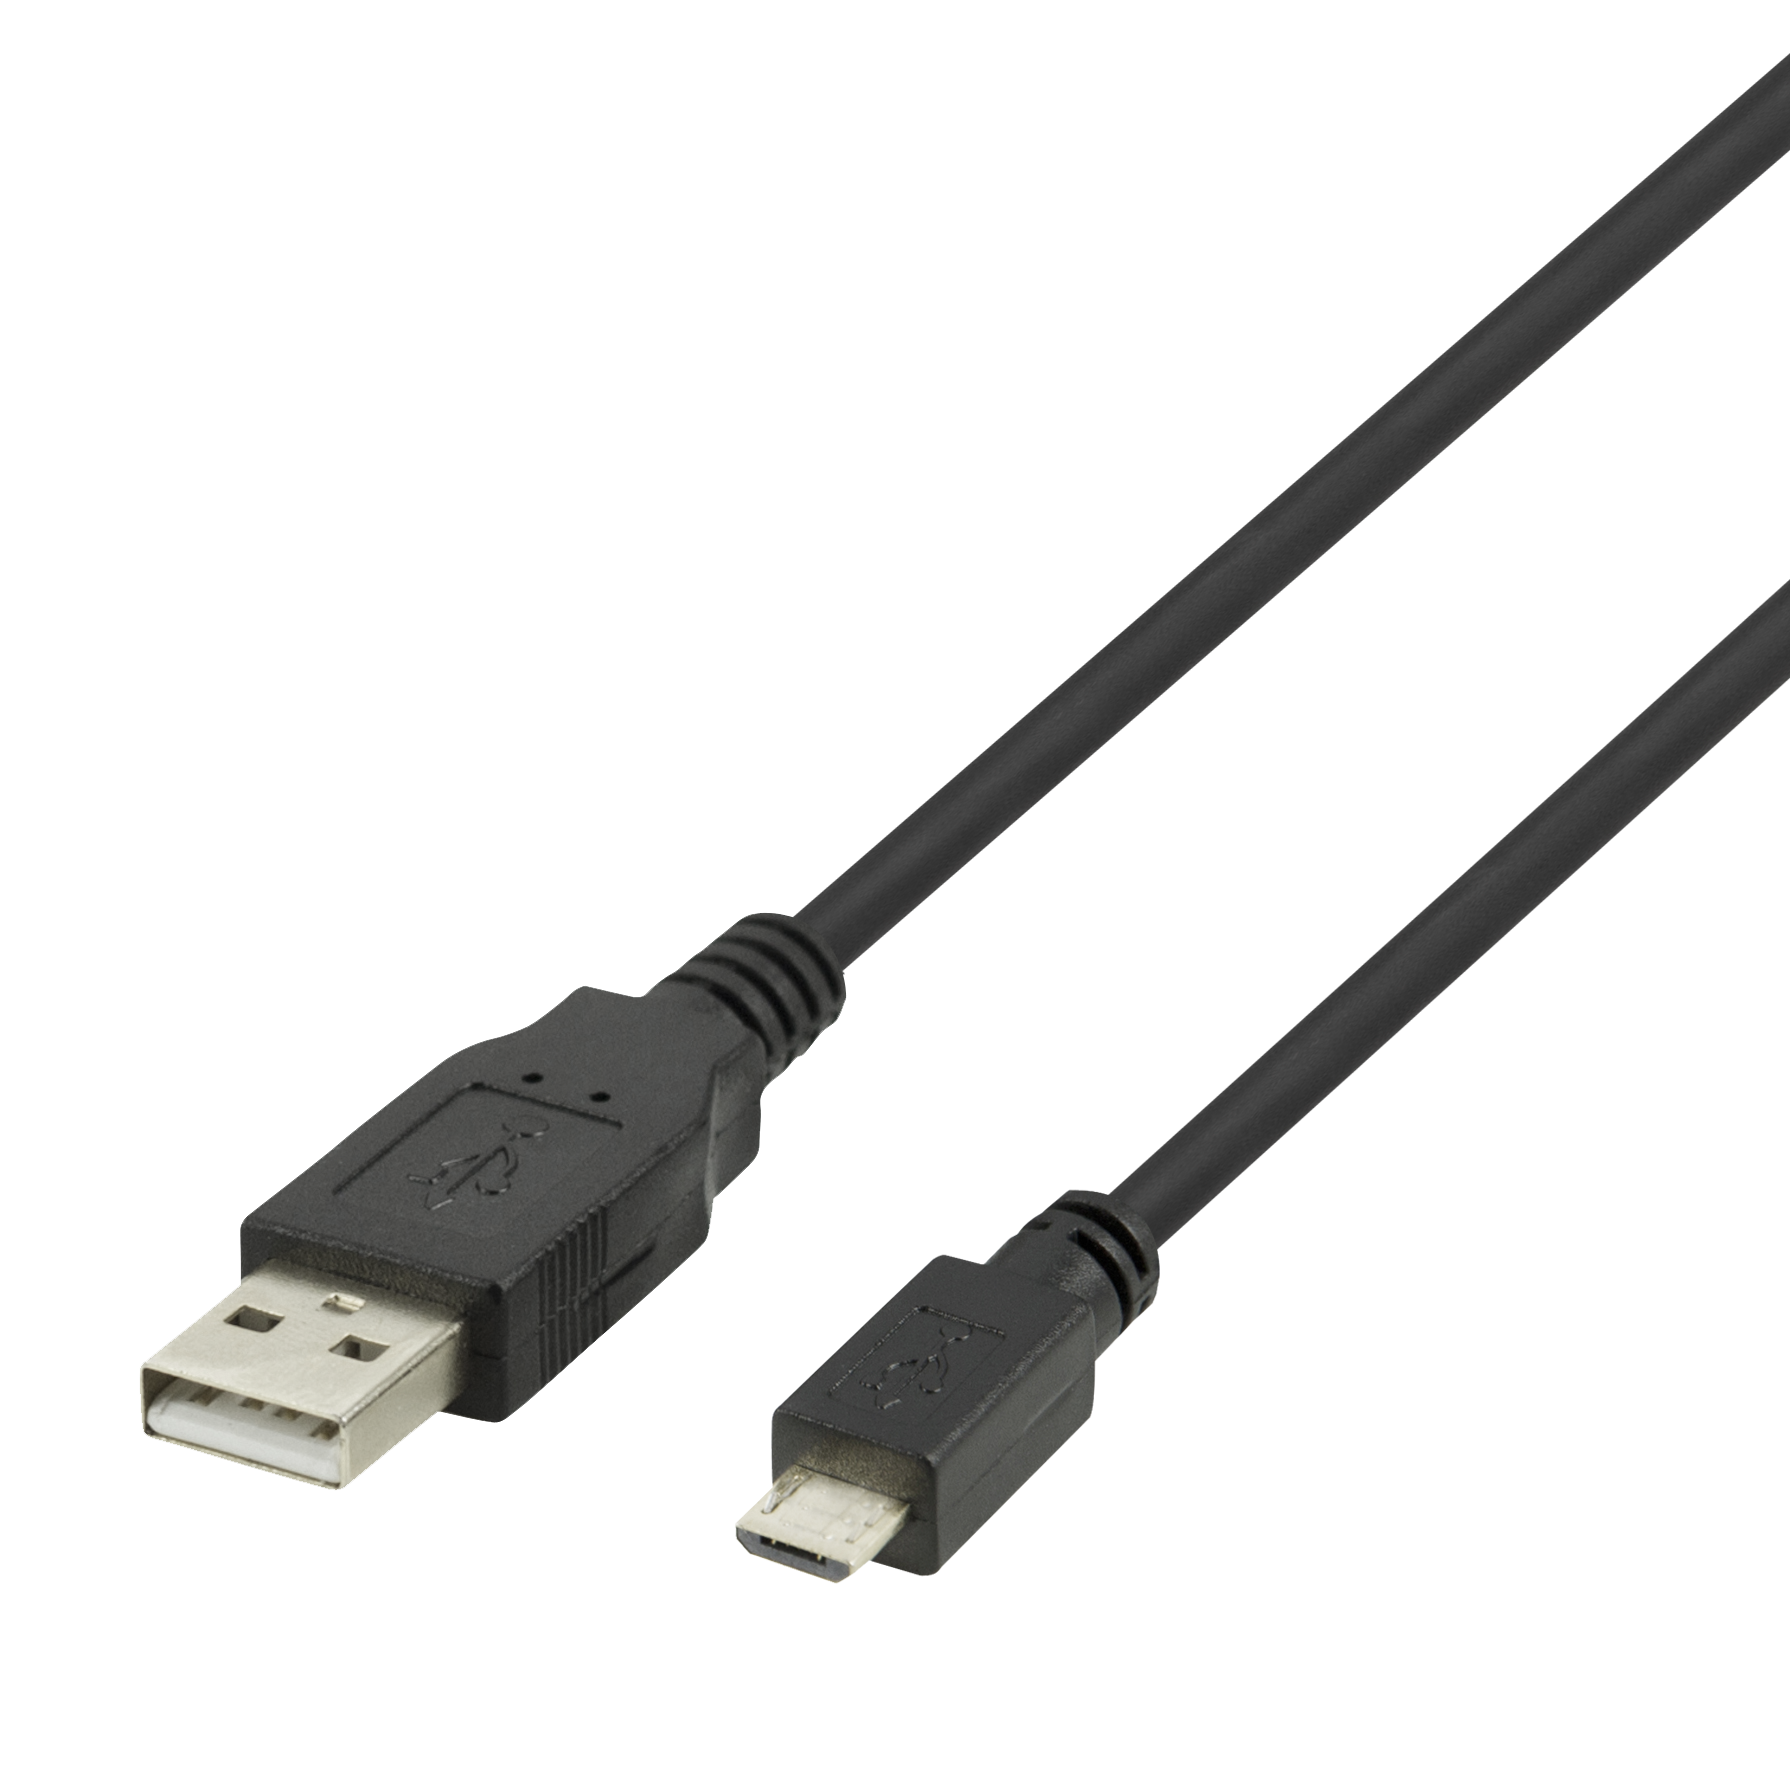 Cable DELTACO USB 2.0 Micro B, 2.4A, 3m black / USB-303S-K / R00140010